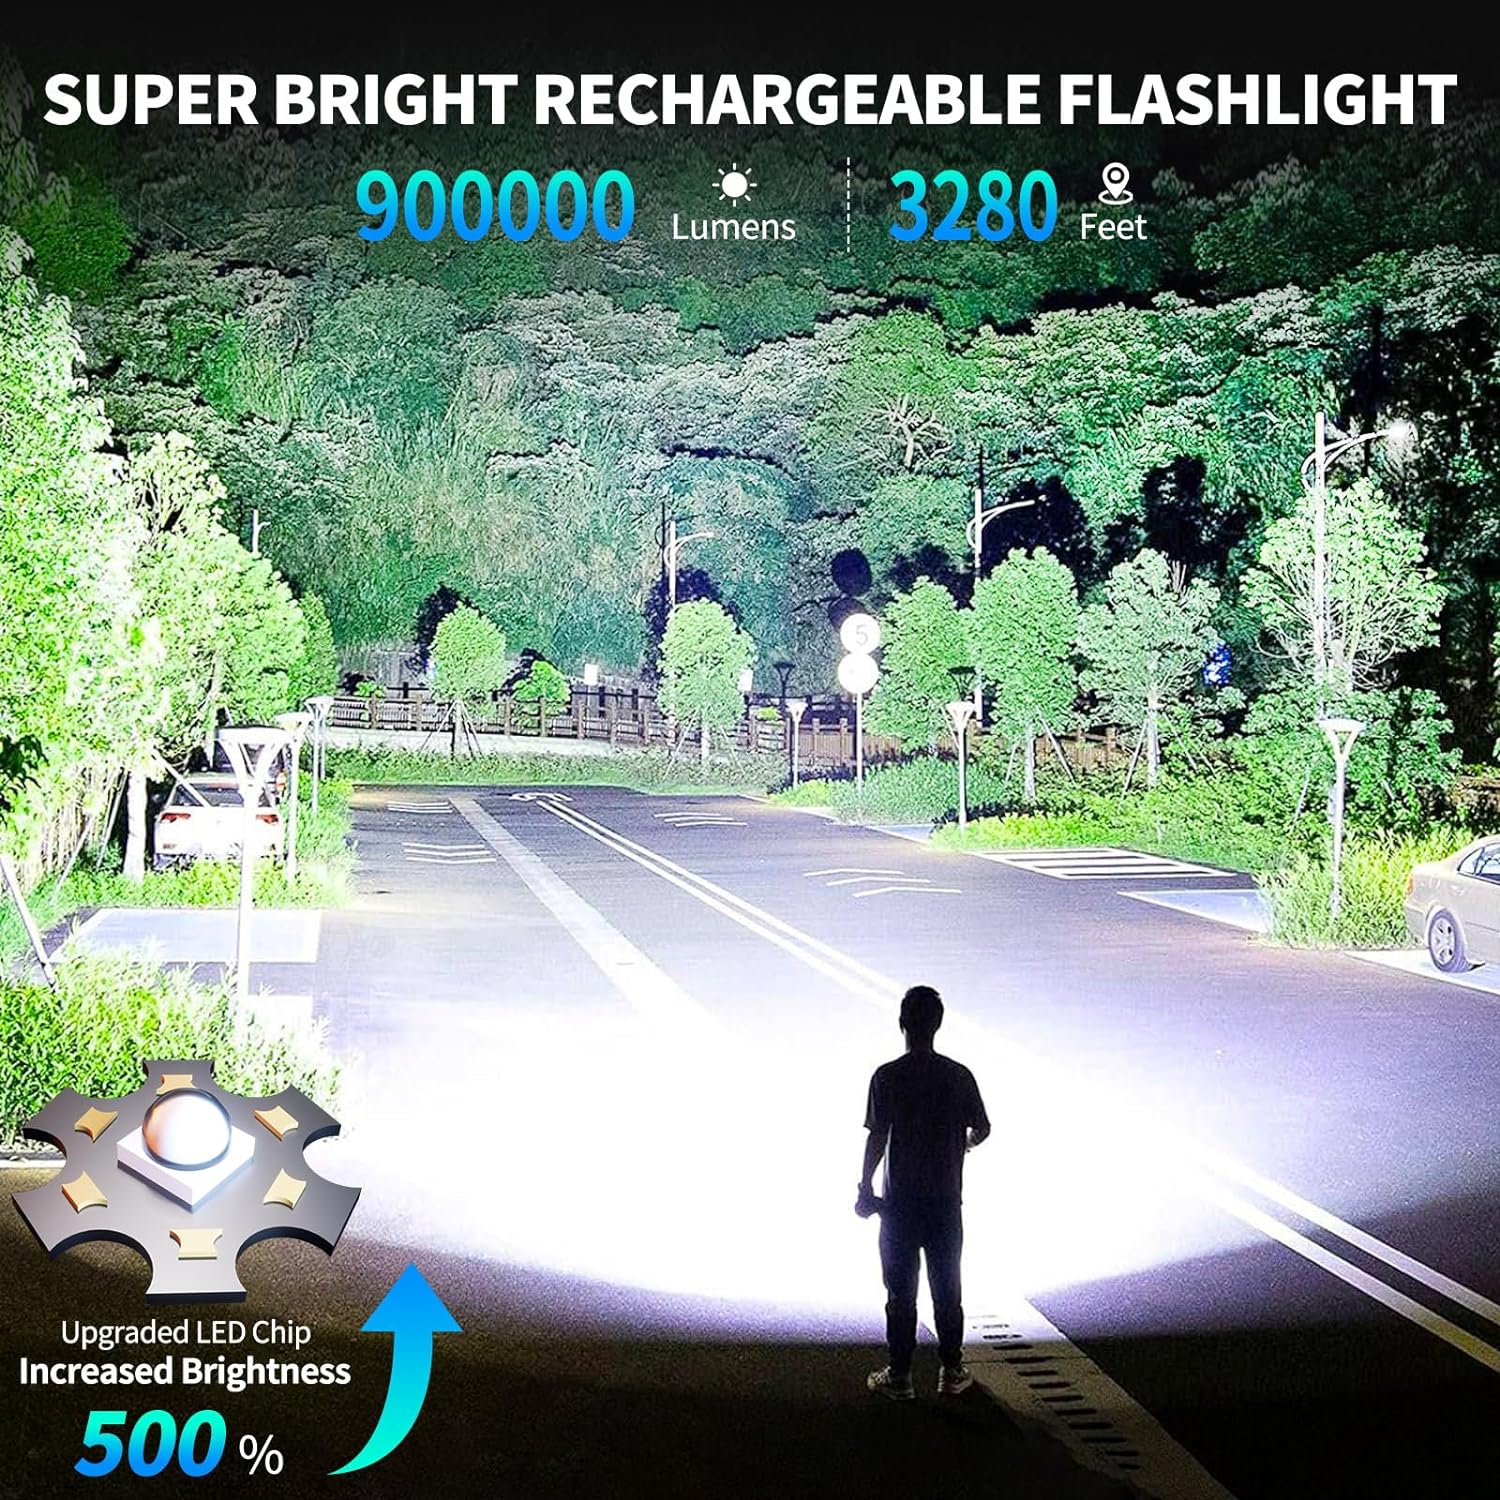 Rechargeable Flashlights High Lumens Flash Light, 900,000 Lumen Super Bright LED Flashlight, Powerful USB Rechargeable Flashlight Adjustable with Work Light, Waterproof Flashlights for Hiking Camping